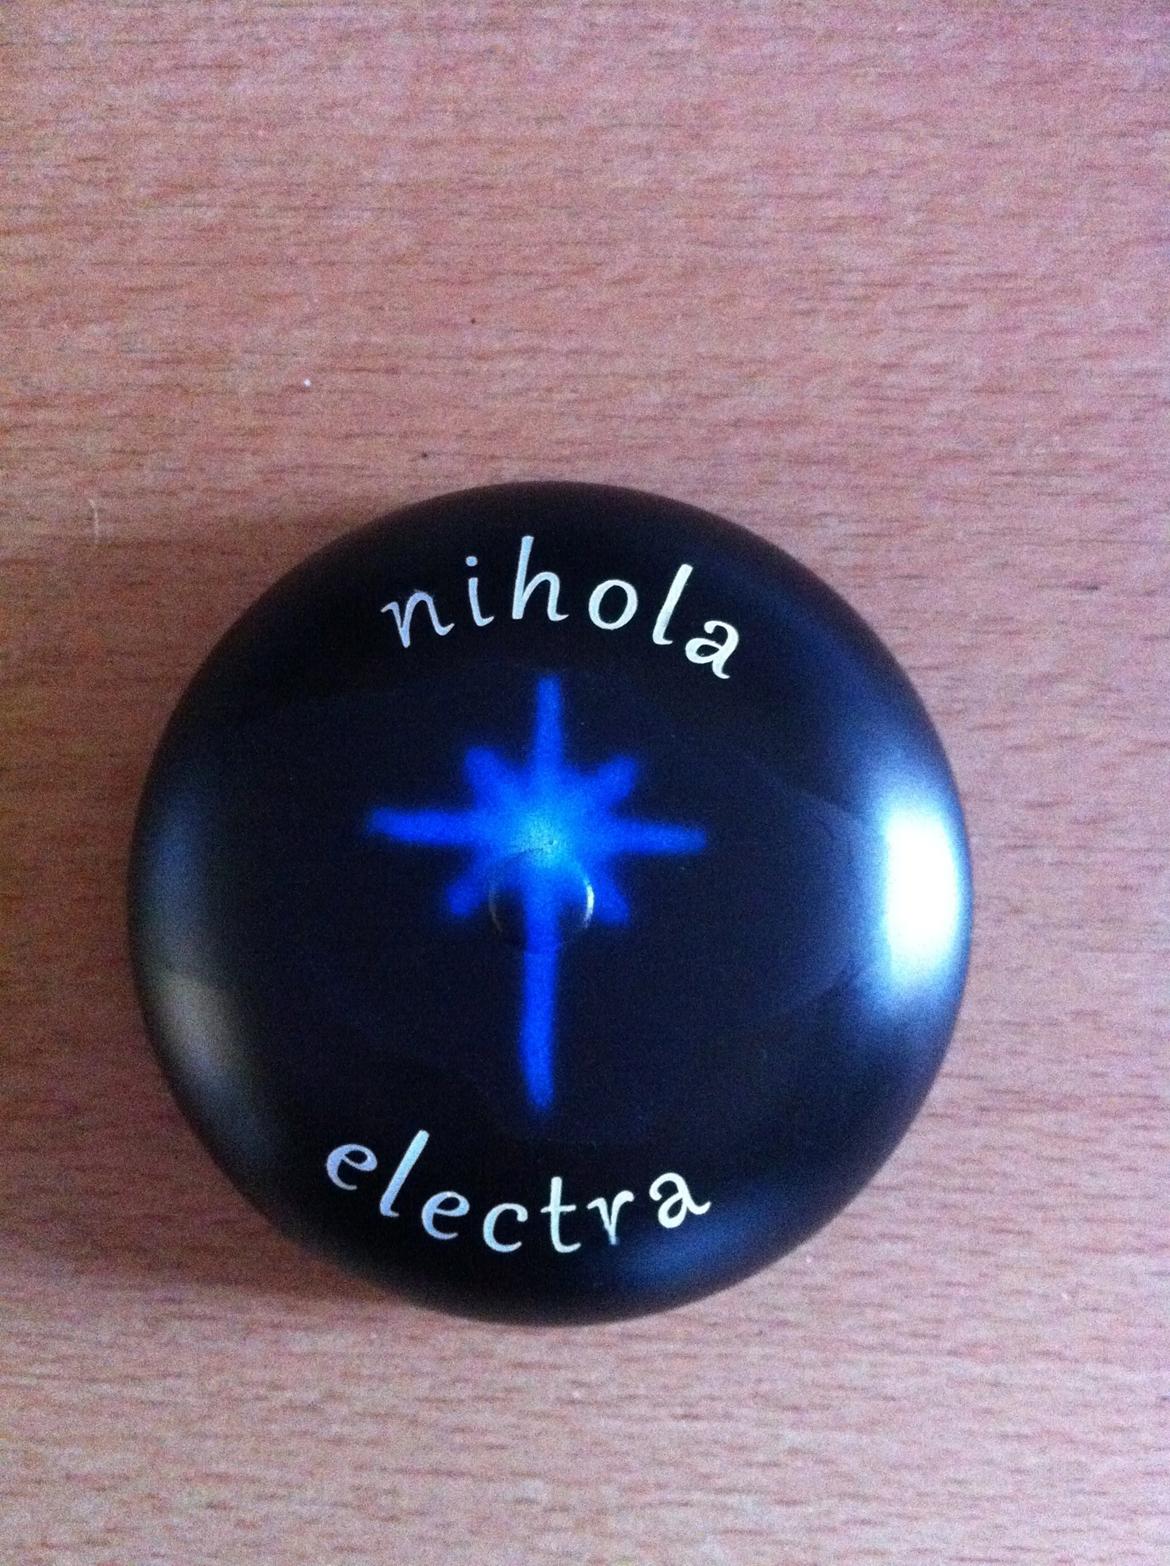 Nihola crossover Electra 1 billede 8